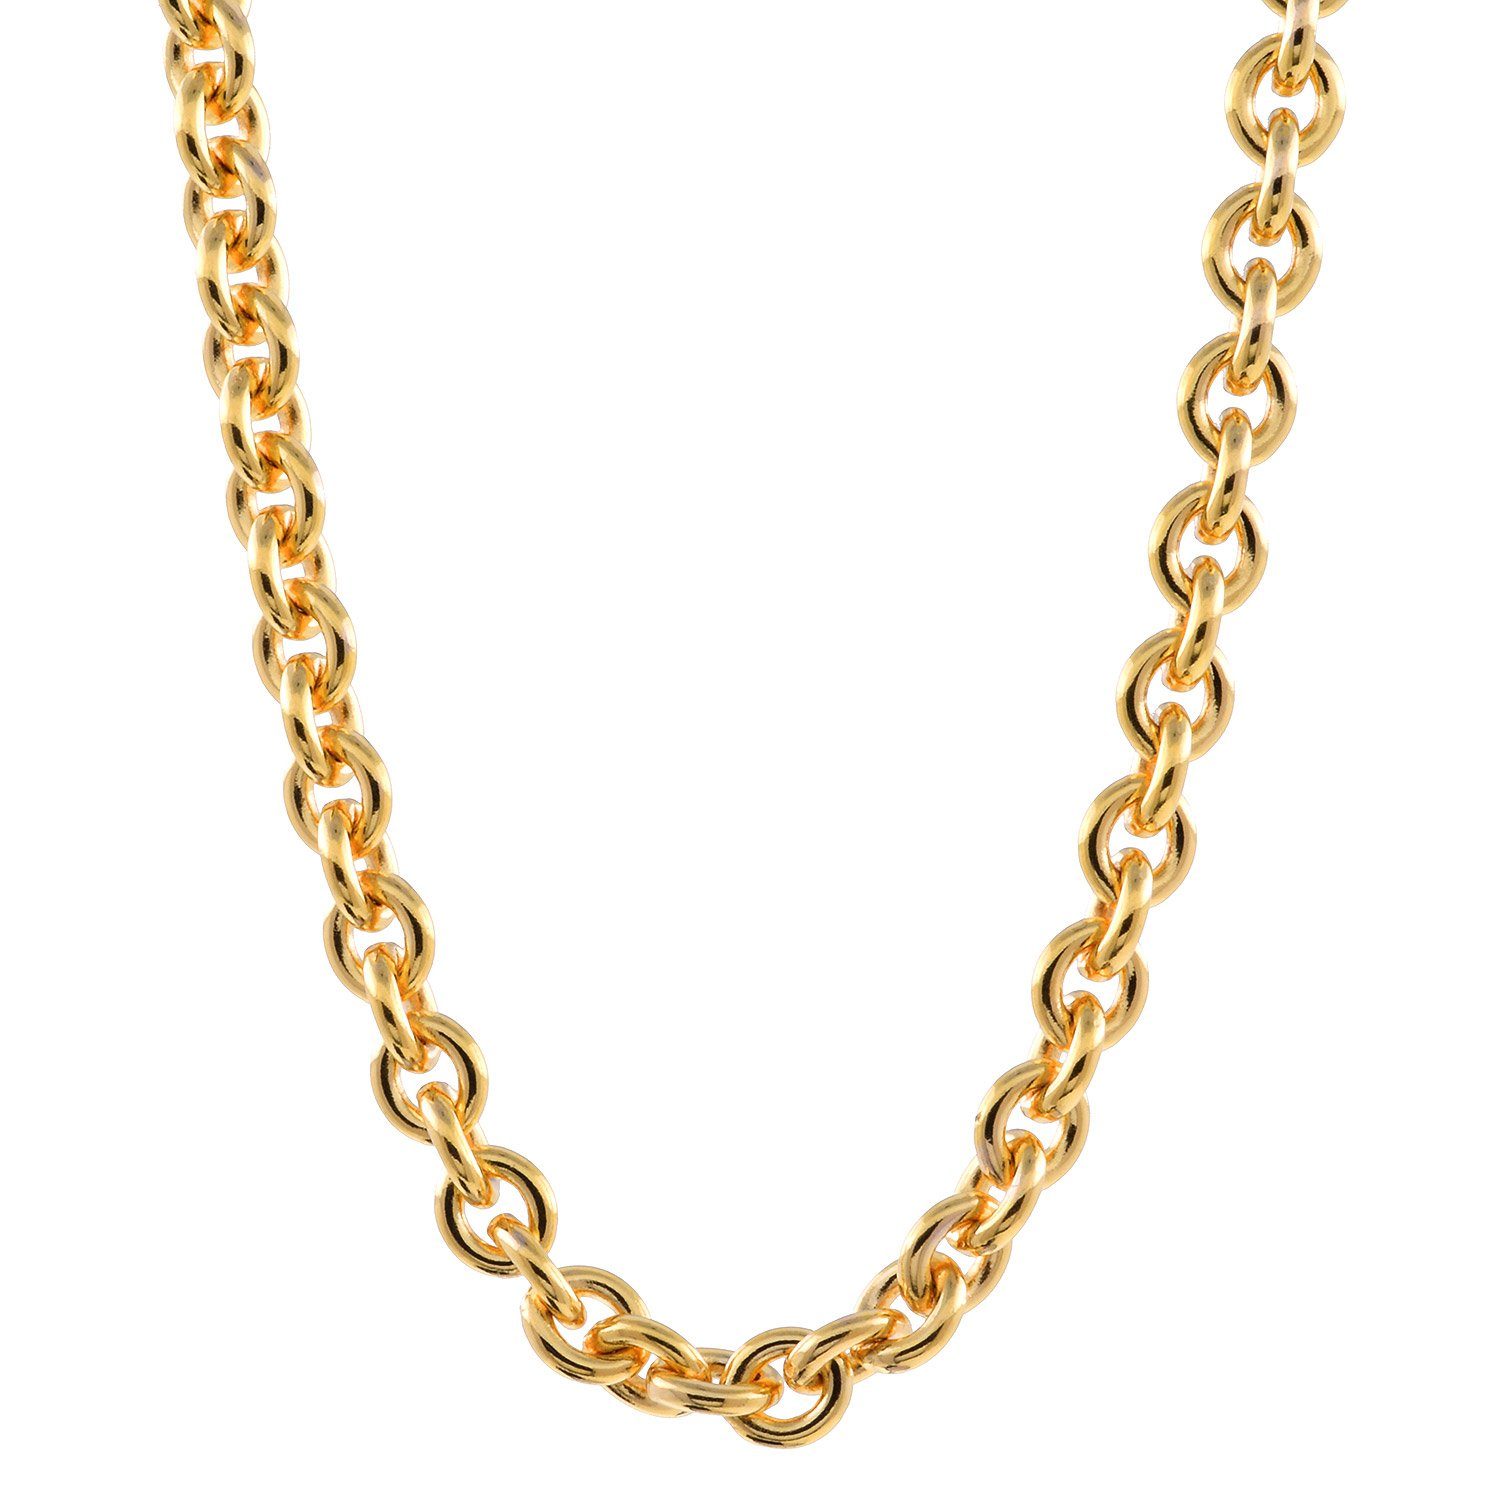 HOPLO Goldkette Ankerkette rund 585 - 14 Karat Gold 2,4 mm 80 cm Goldkette  Halskette, Made in Germany